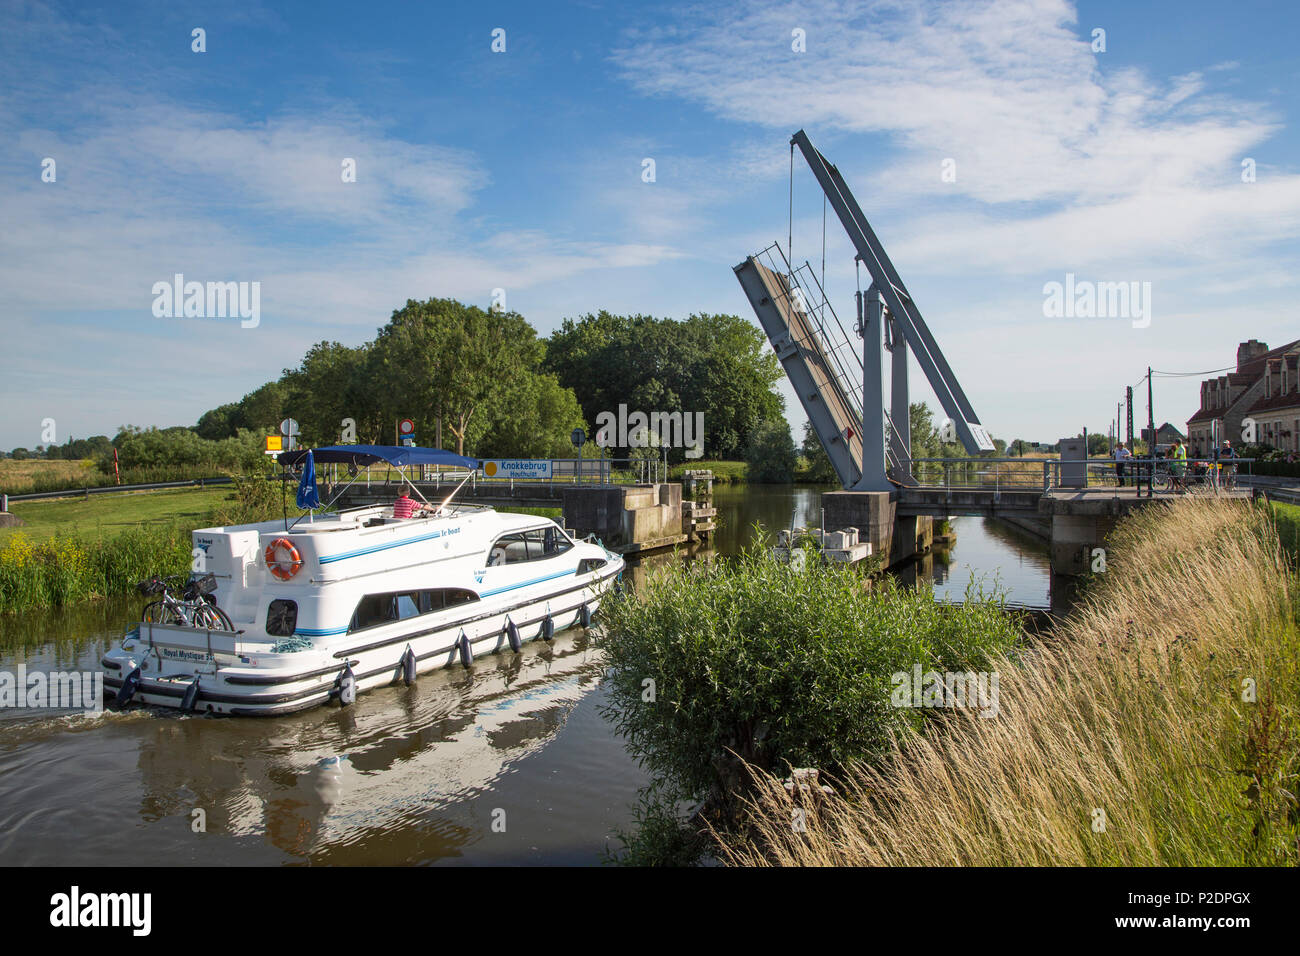 Le Boat Royal Mystique houseboat at Knokkebrug drawbridge on the IJzer Yser river, near Diksmuide, Flemish Region, Belgium Stock Photo